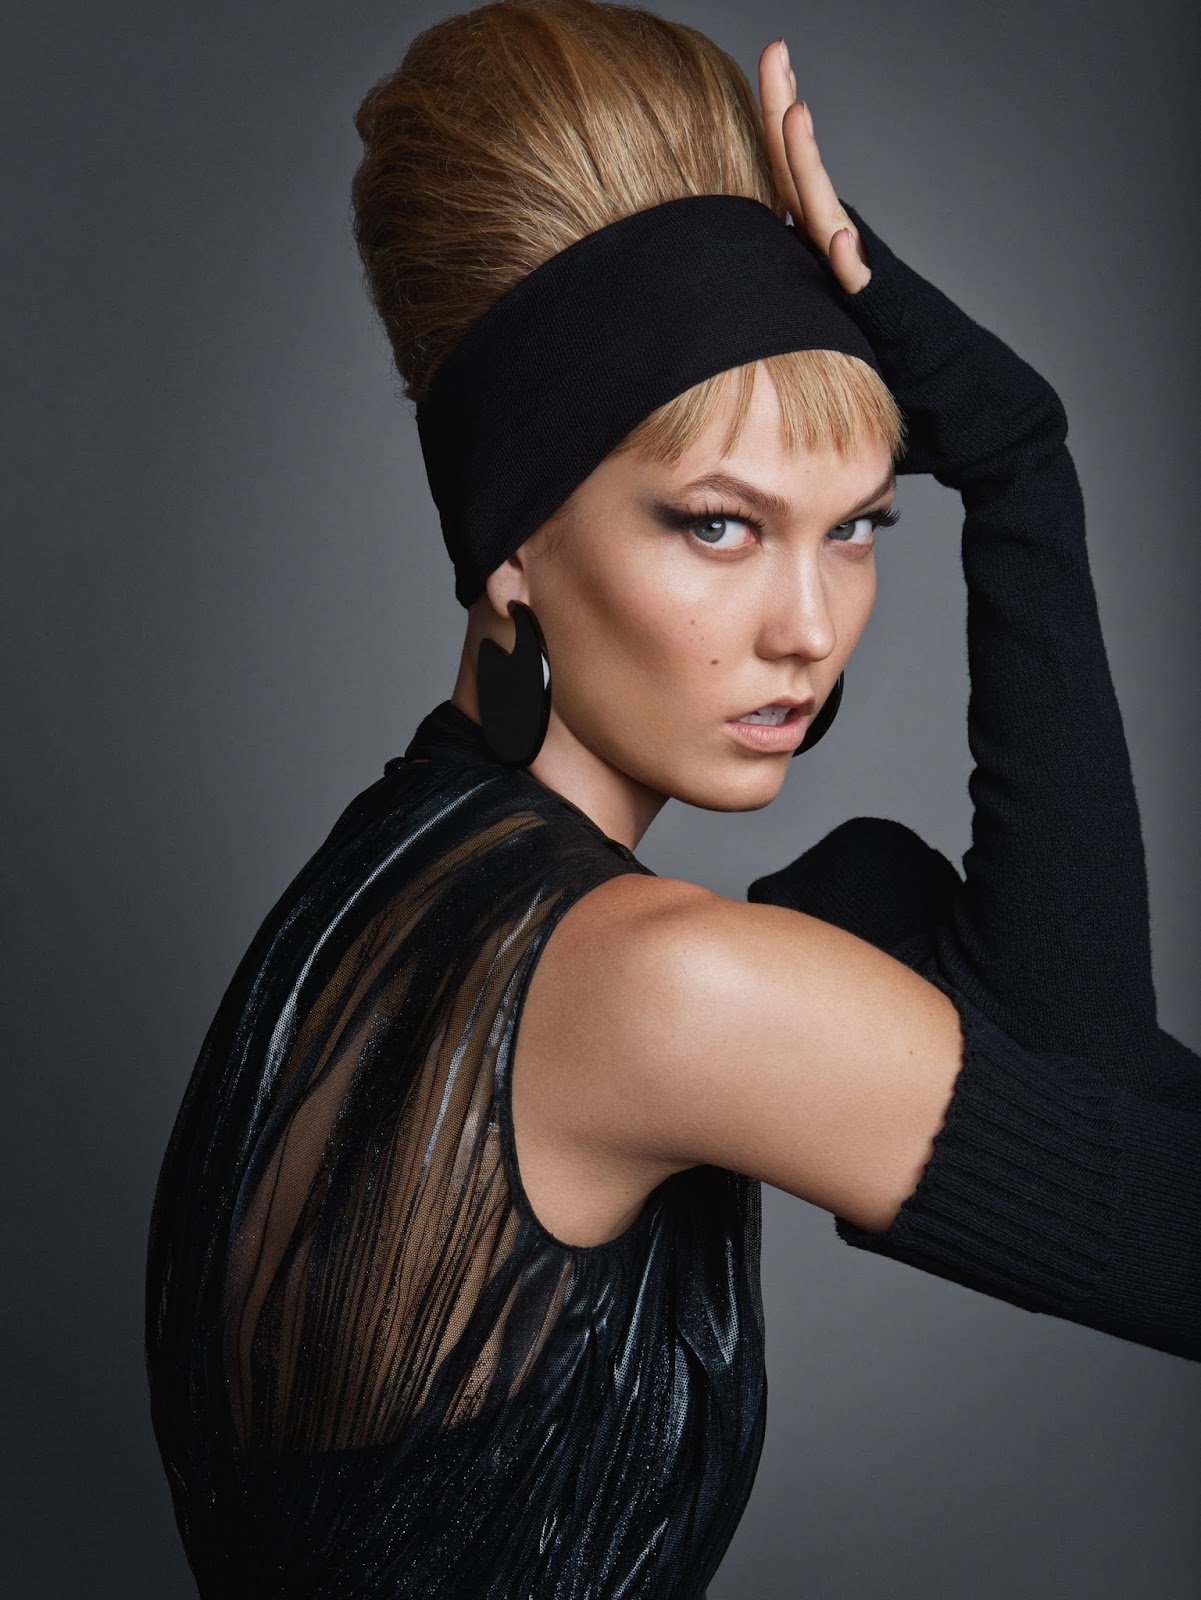 Karlie-Kloss-by-Patrick-Demarchelier-for-Vogue-UK-November-2015-2.jpg